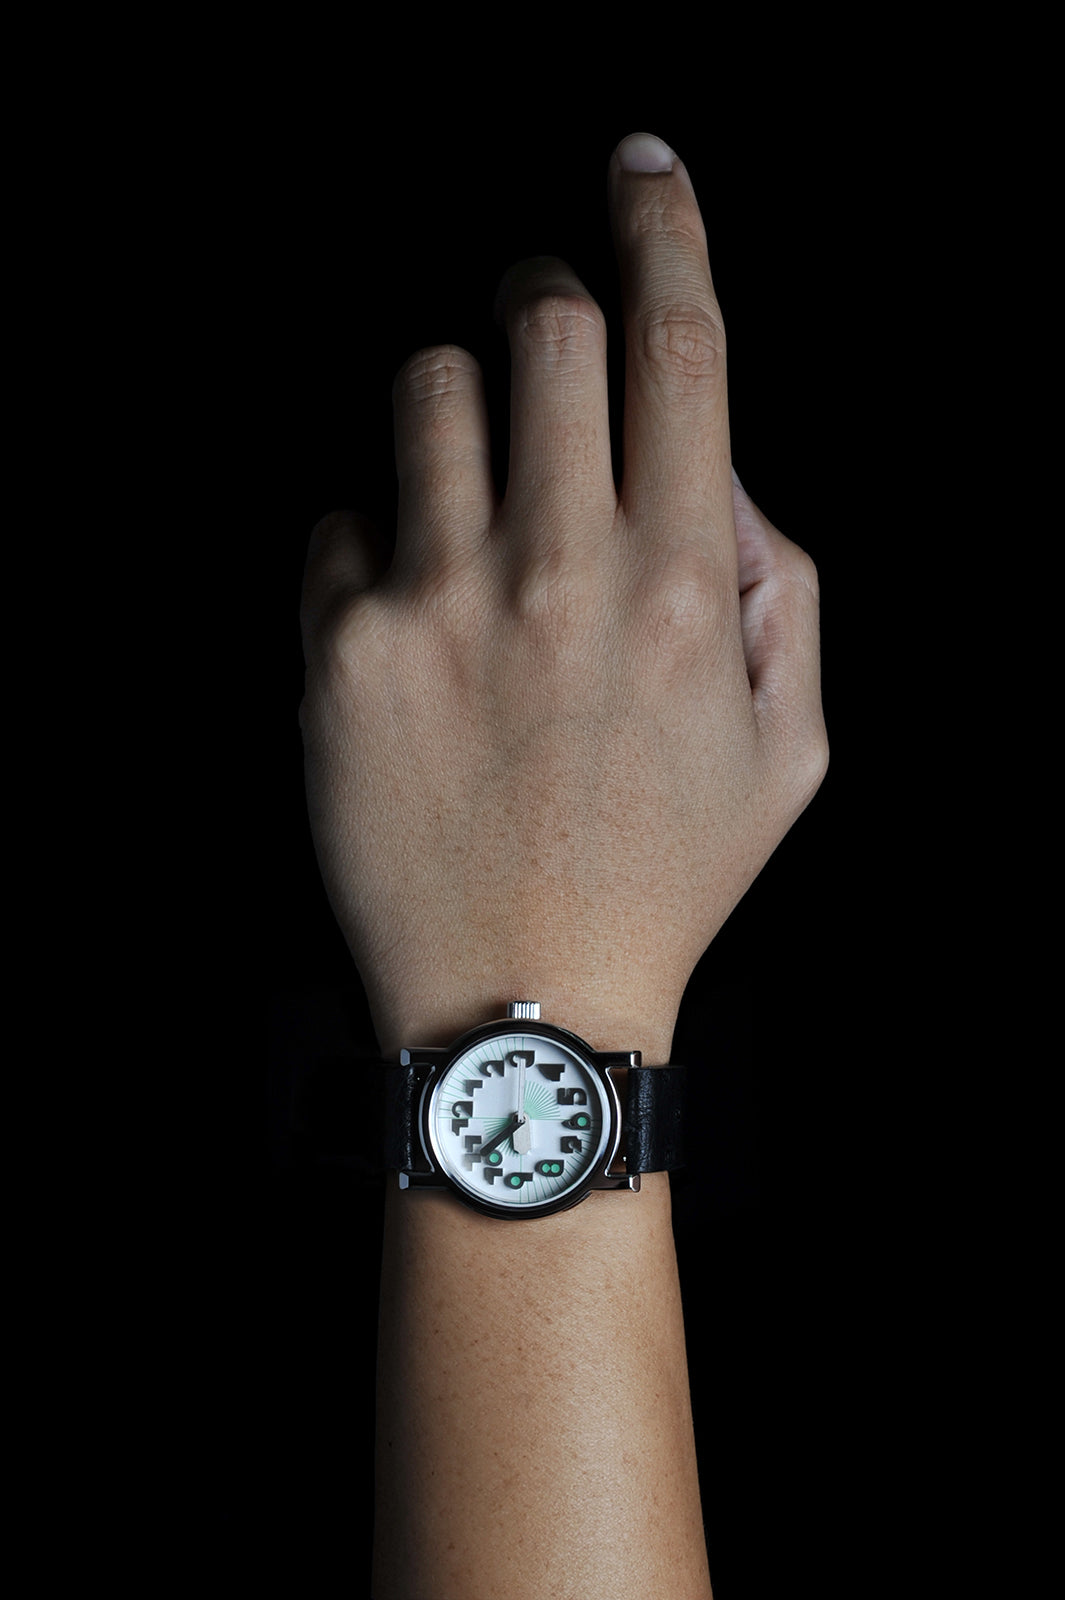 M/M Paris x Anicorn "2" collection - Timepiece "2BUSY" (50pcs worldwide)